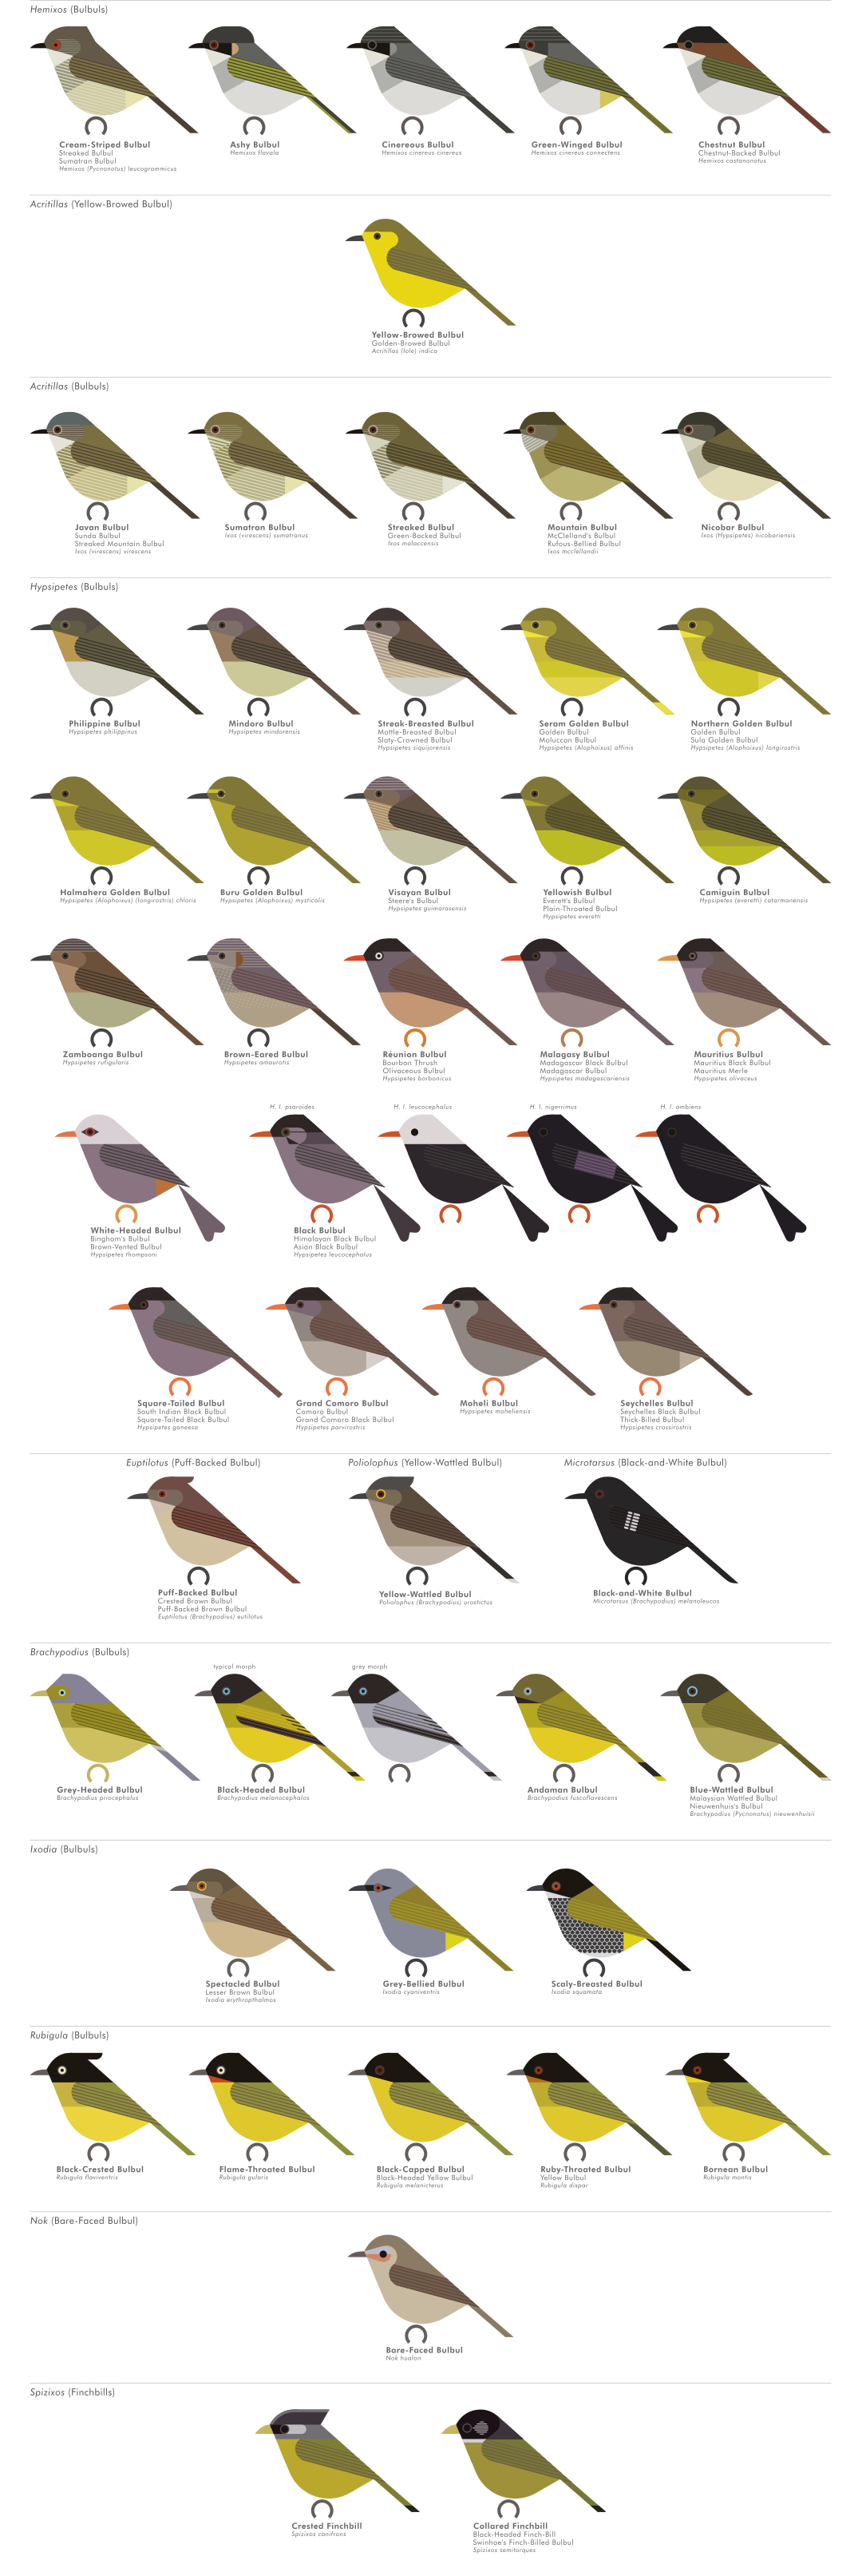 scott partridge - AVE - avian vector encyclopedia - bulbuls - bird vector art